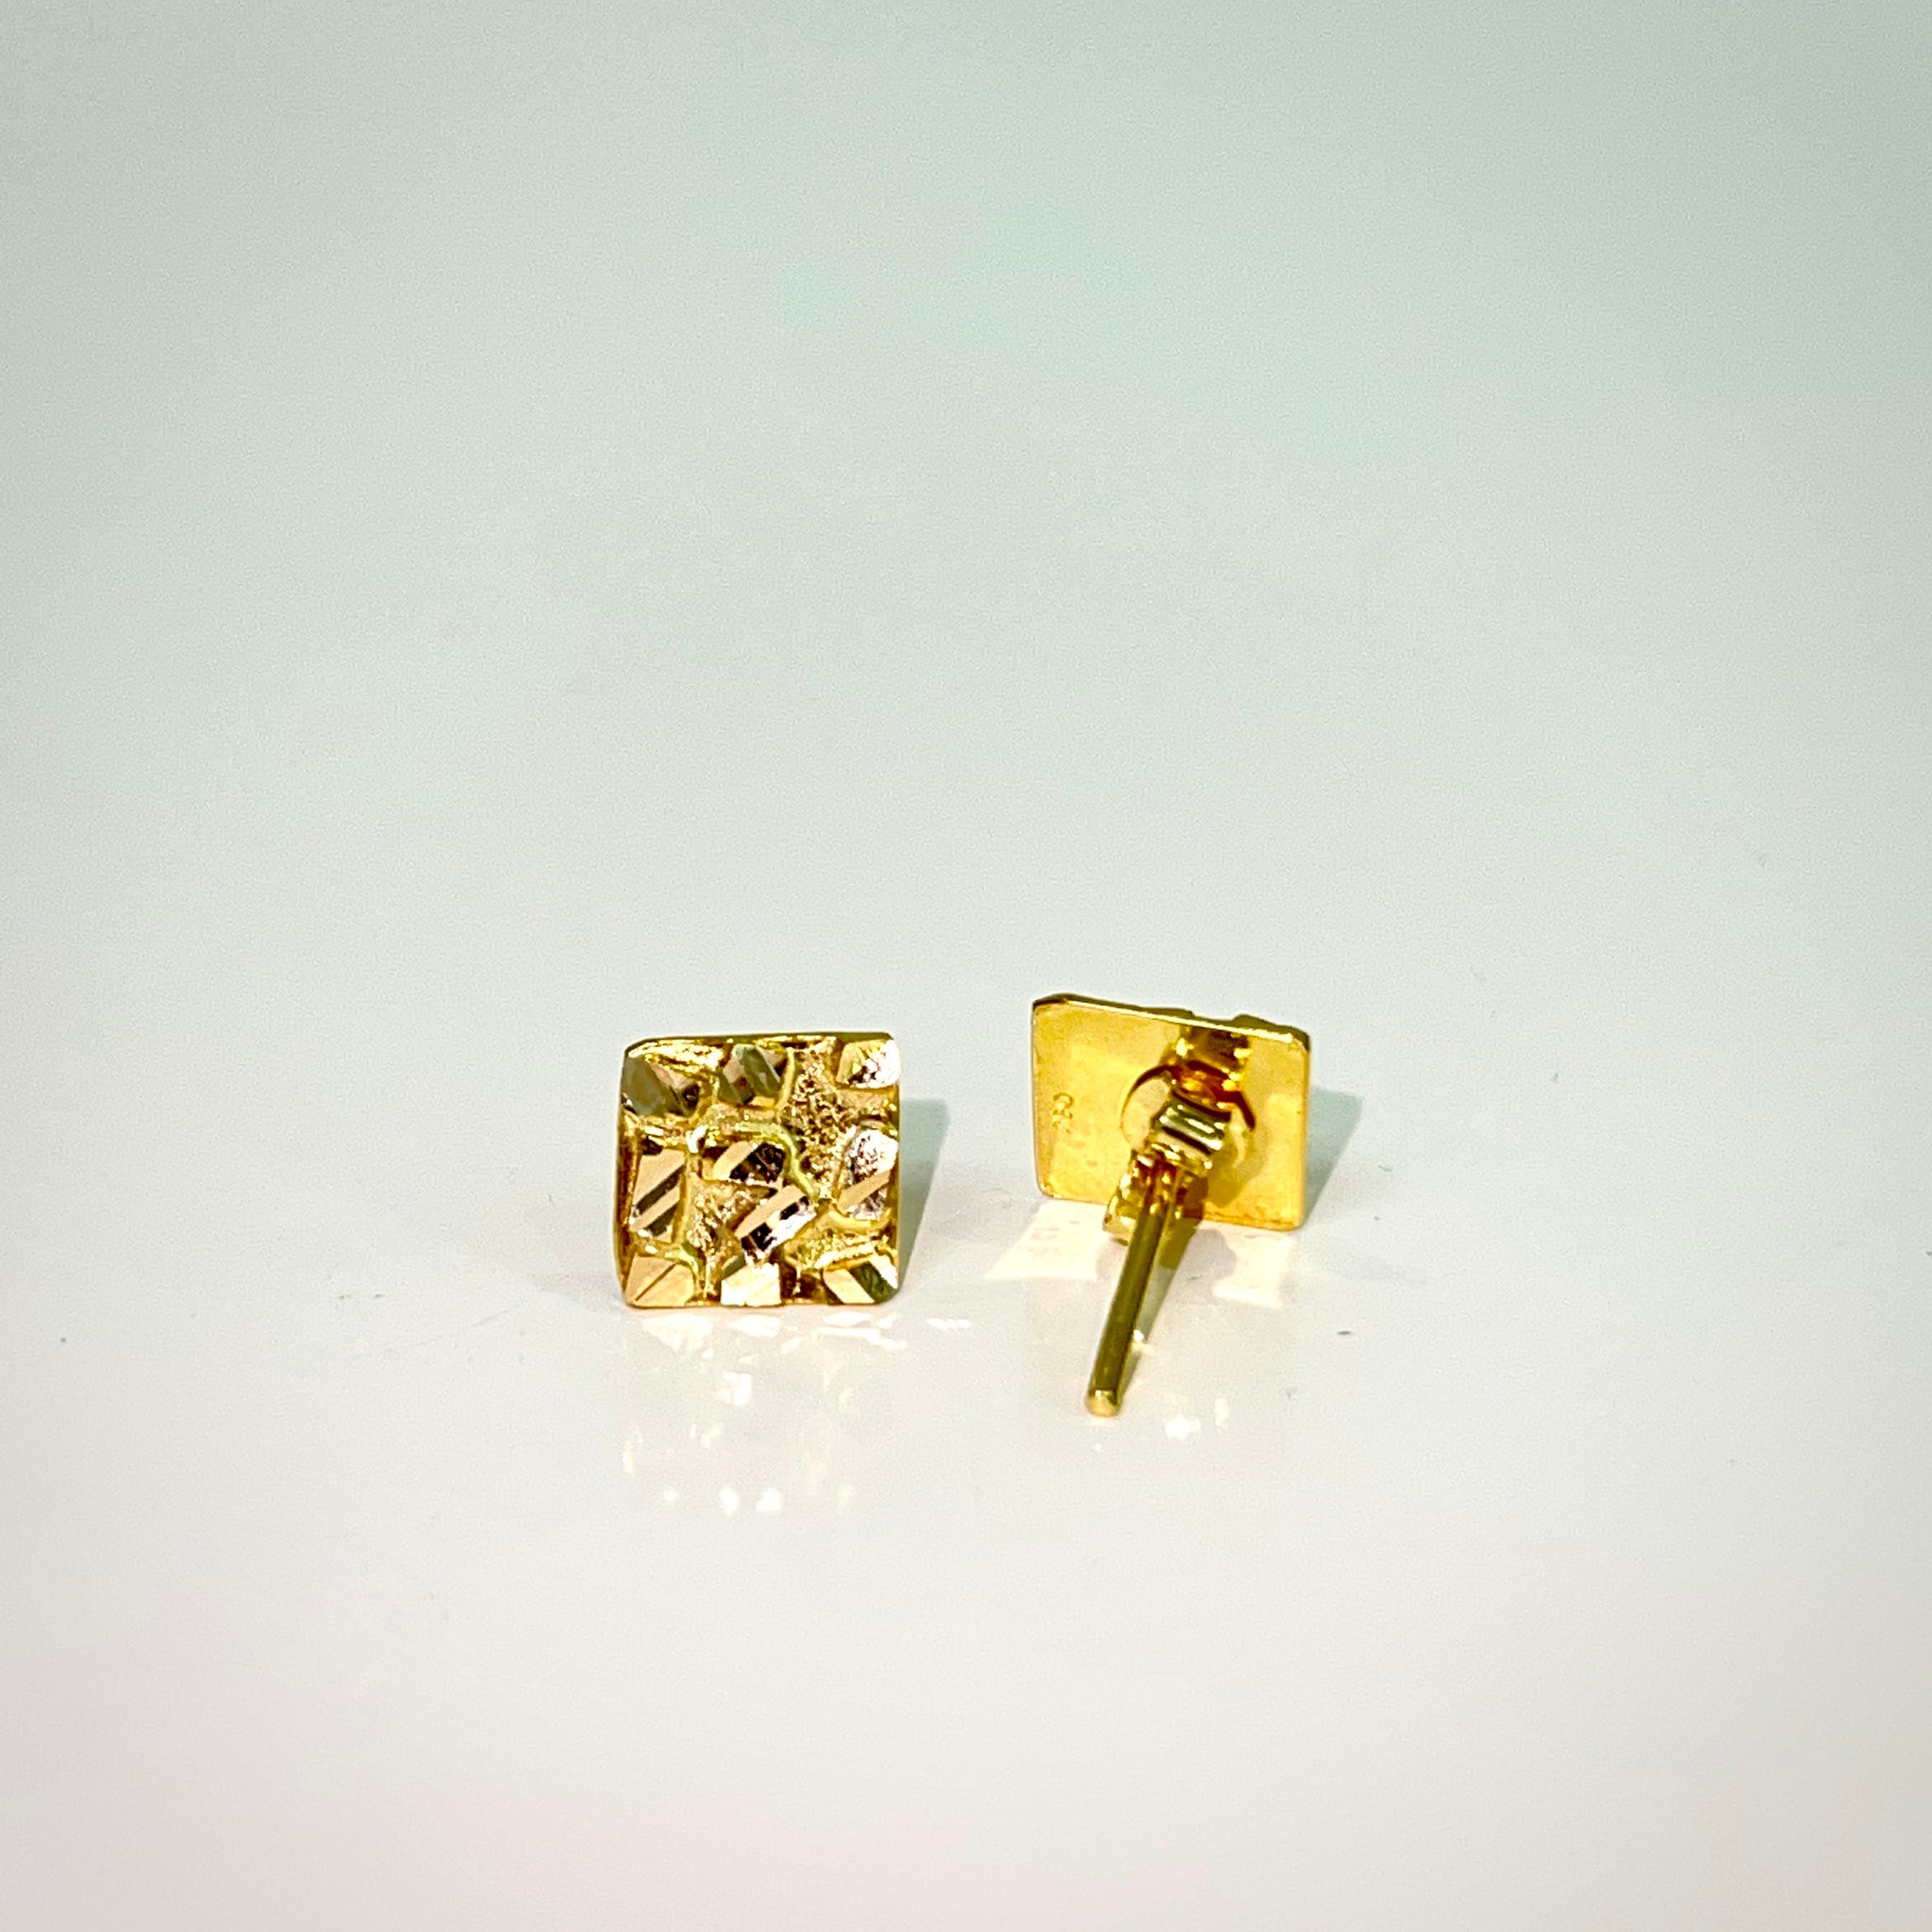 Piet Piet Earrings - 18 carat gold